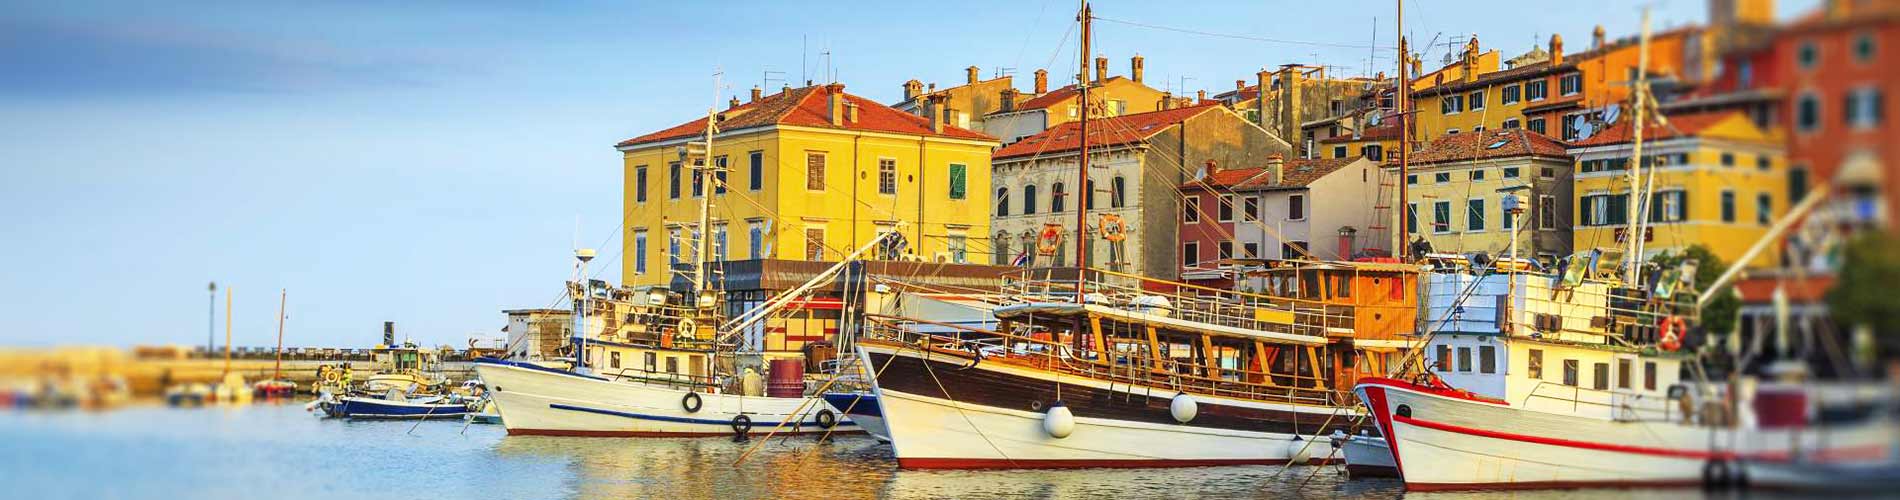 Rovinj harbor Istria Croatia.jpg